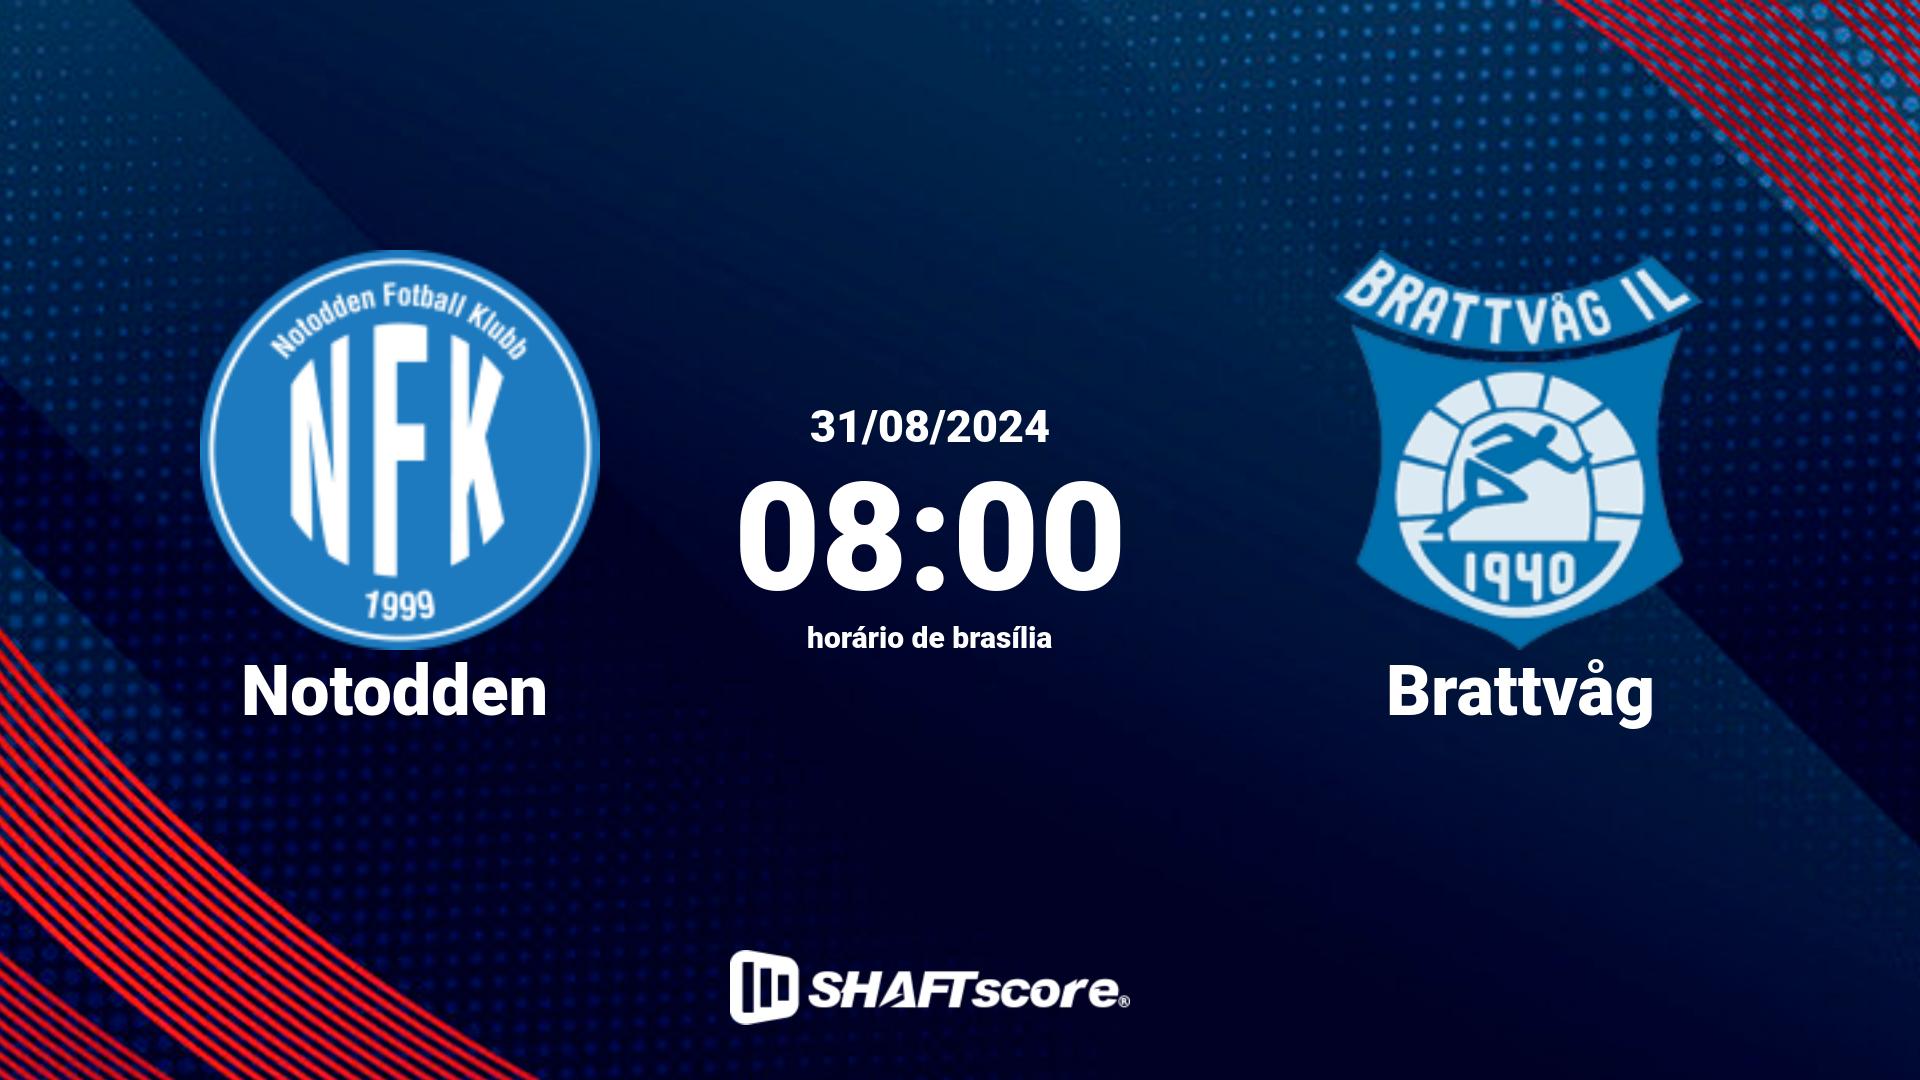 Estatísticas do jogo Notodden vs Brattvåg 31.08 08:00